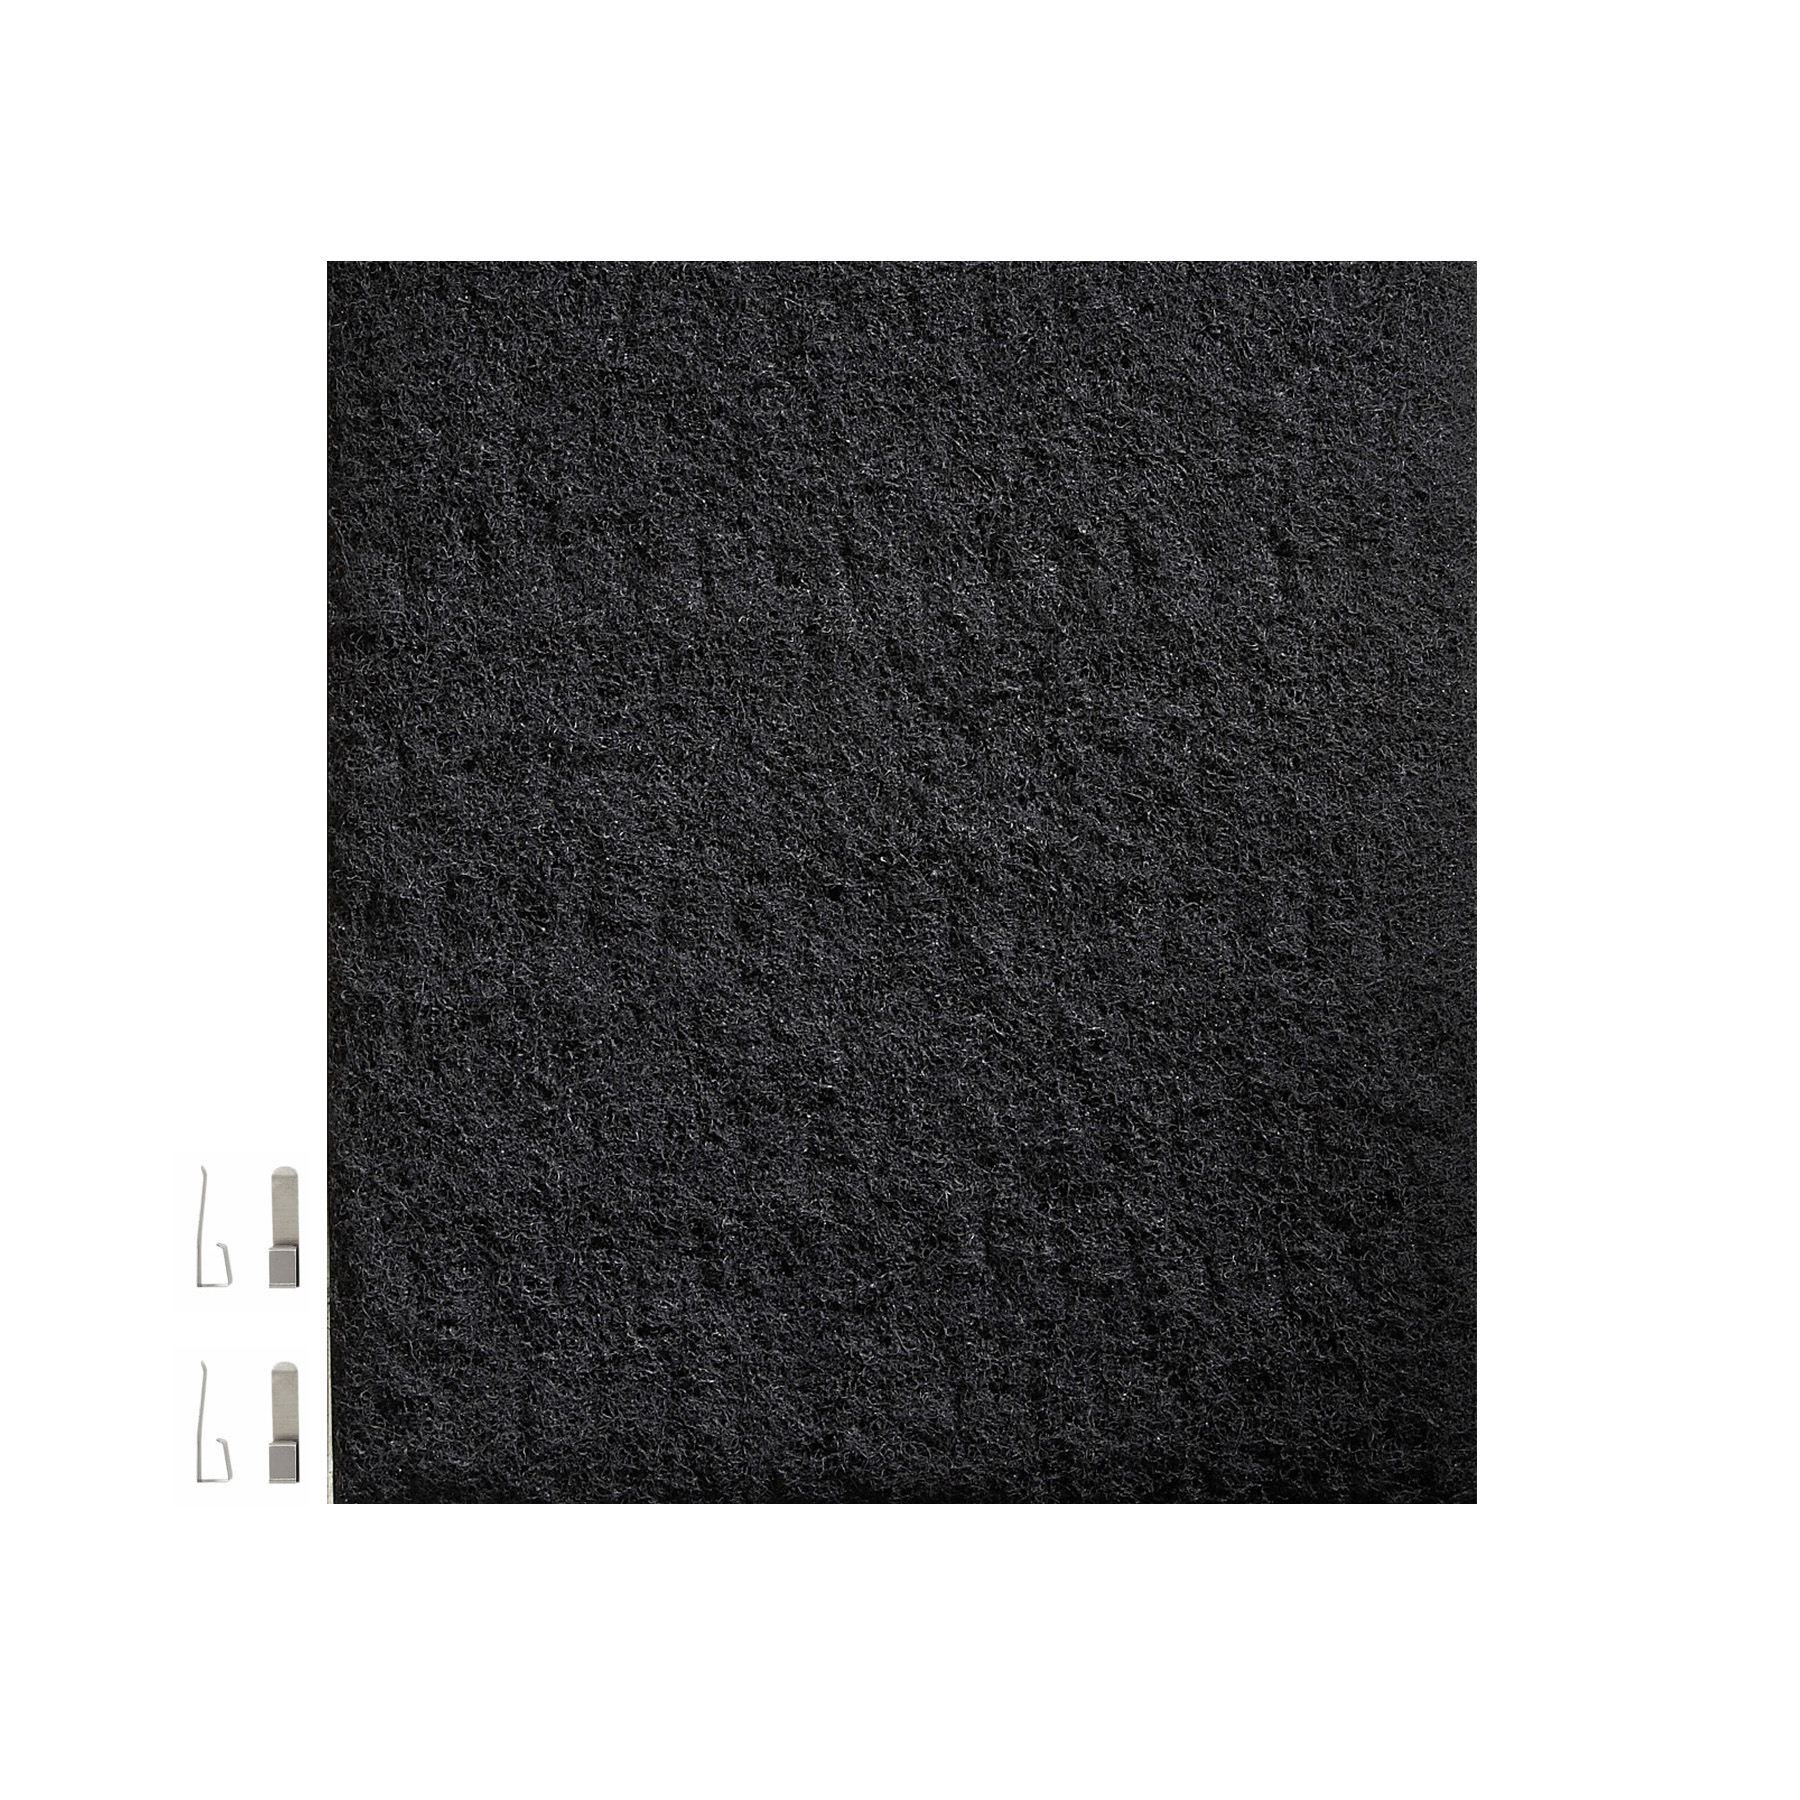 Broan BXT1系列范围HOOD 10.875“ x 10.5” x 0.125”的木炭替换过滤器